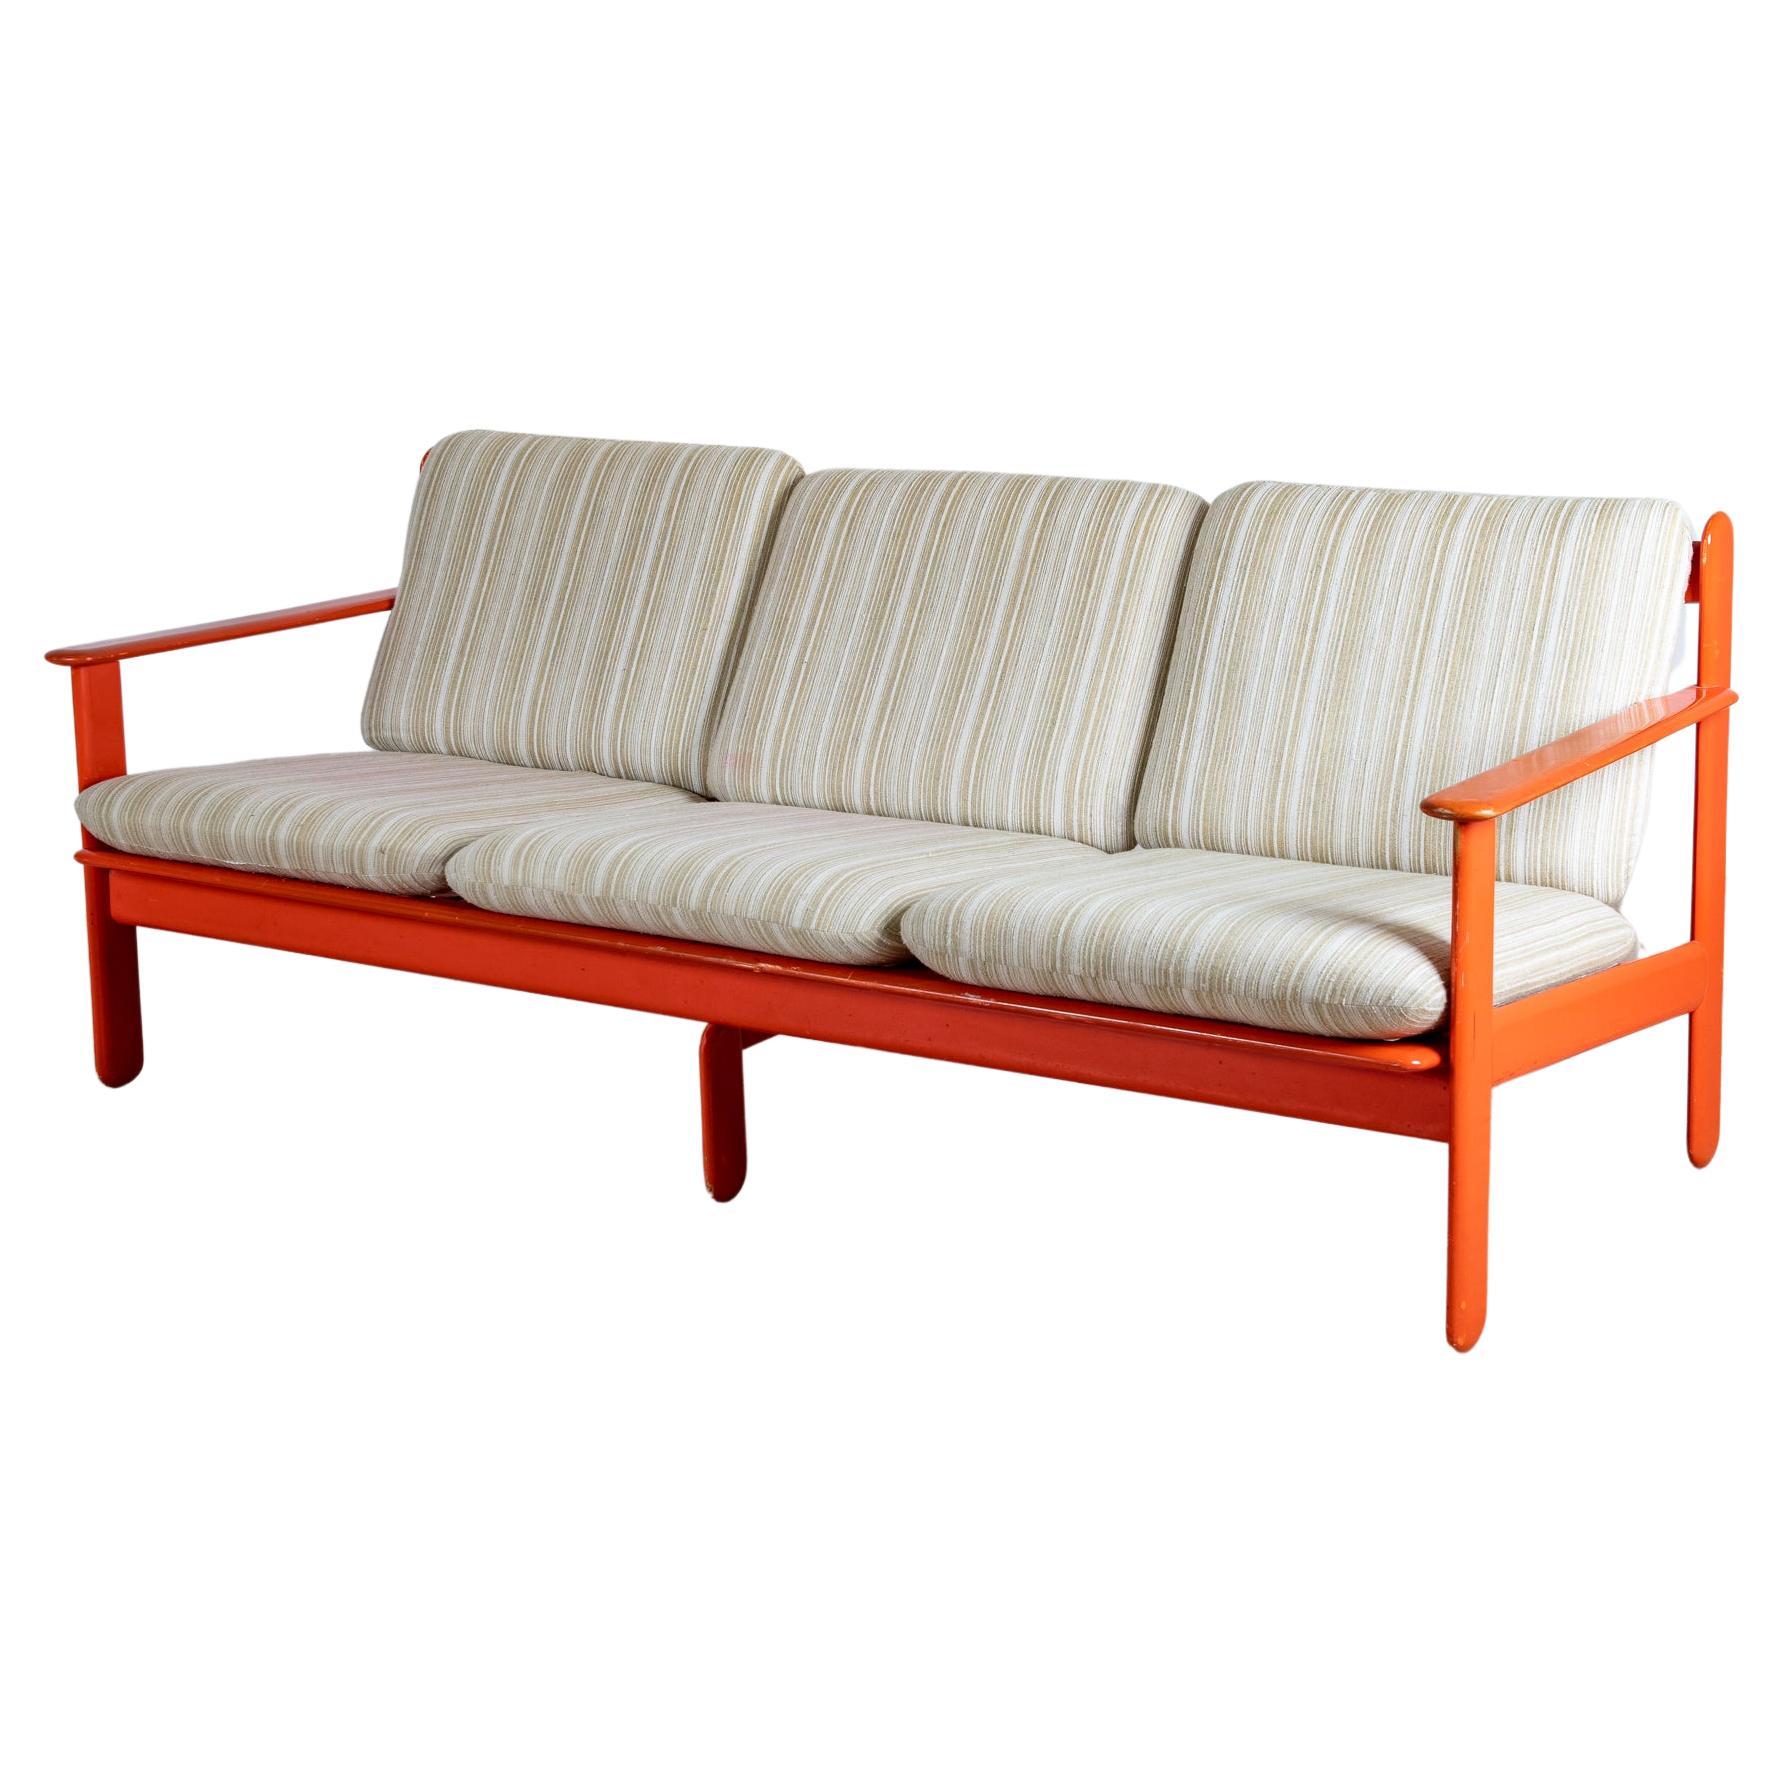 Orangefarbenes 3-Sitzer-Sofa, Italien, 1970er Jahre